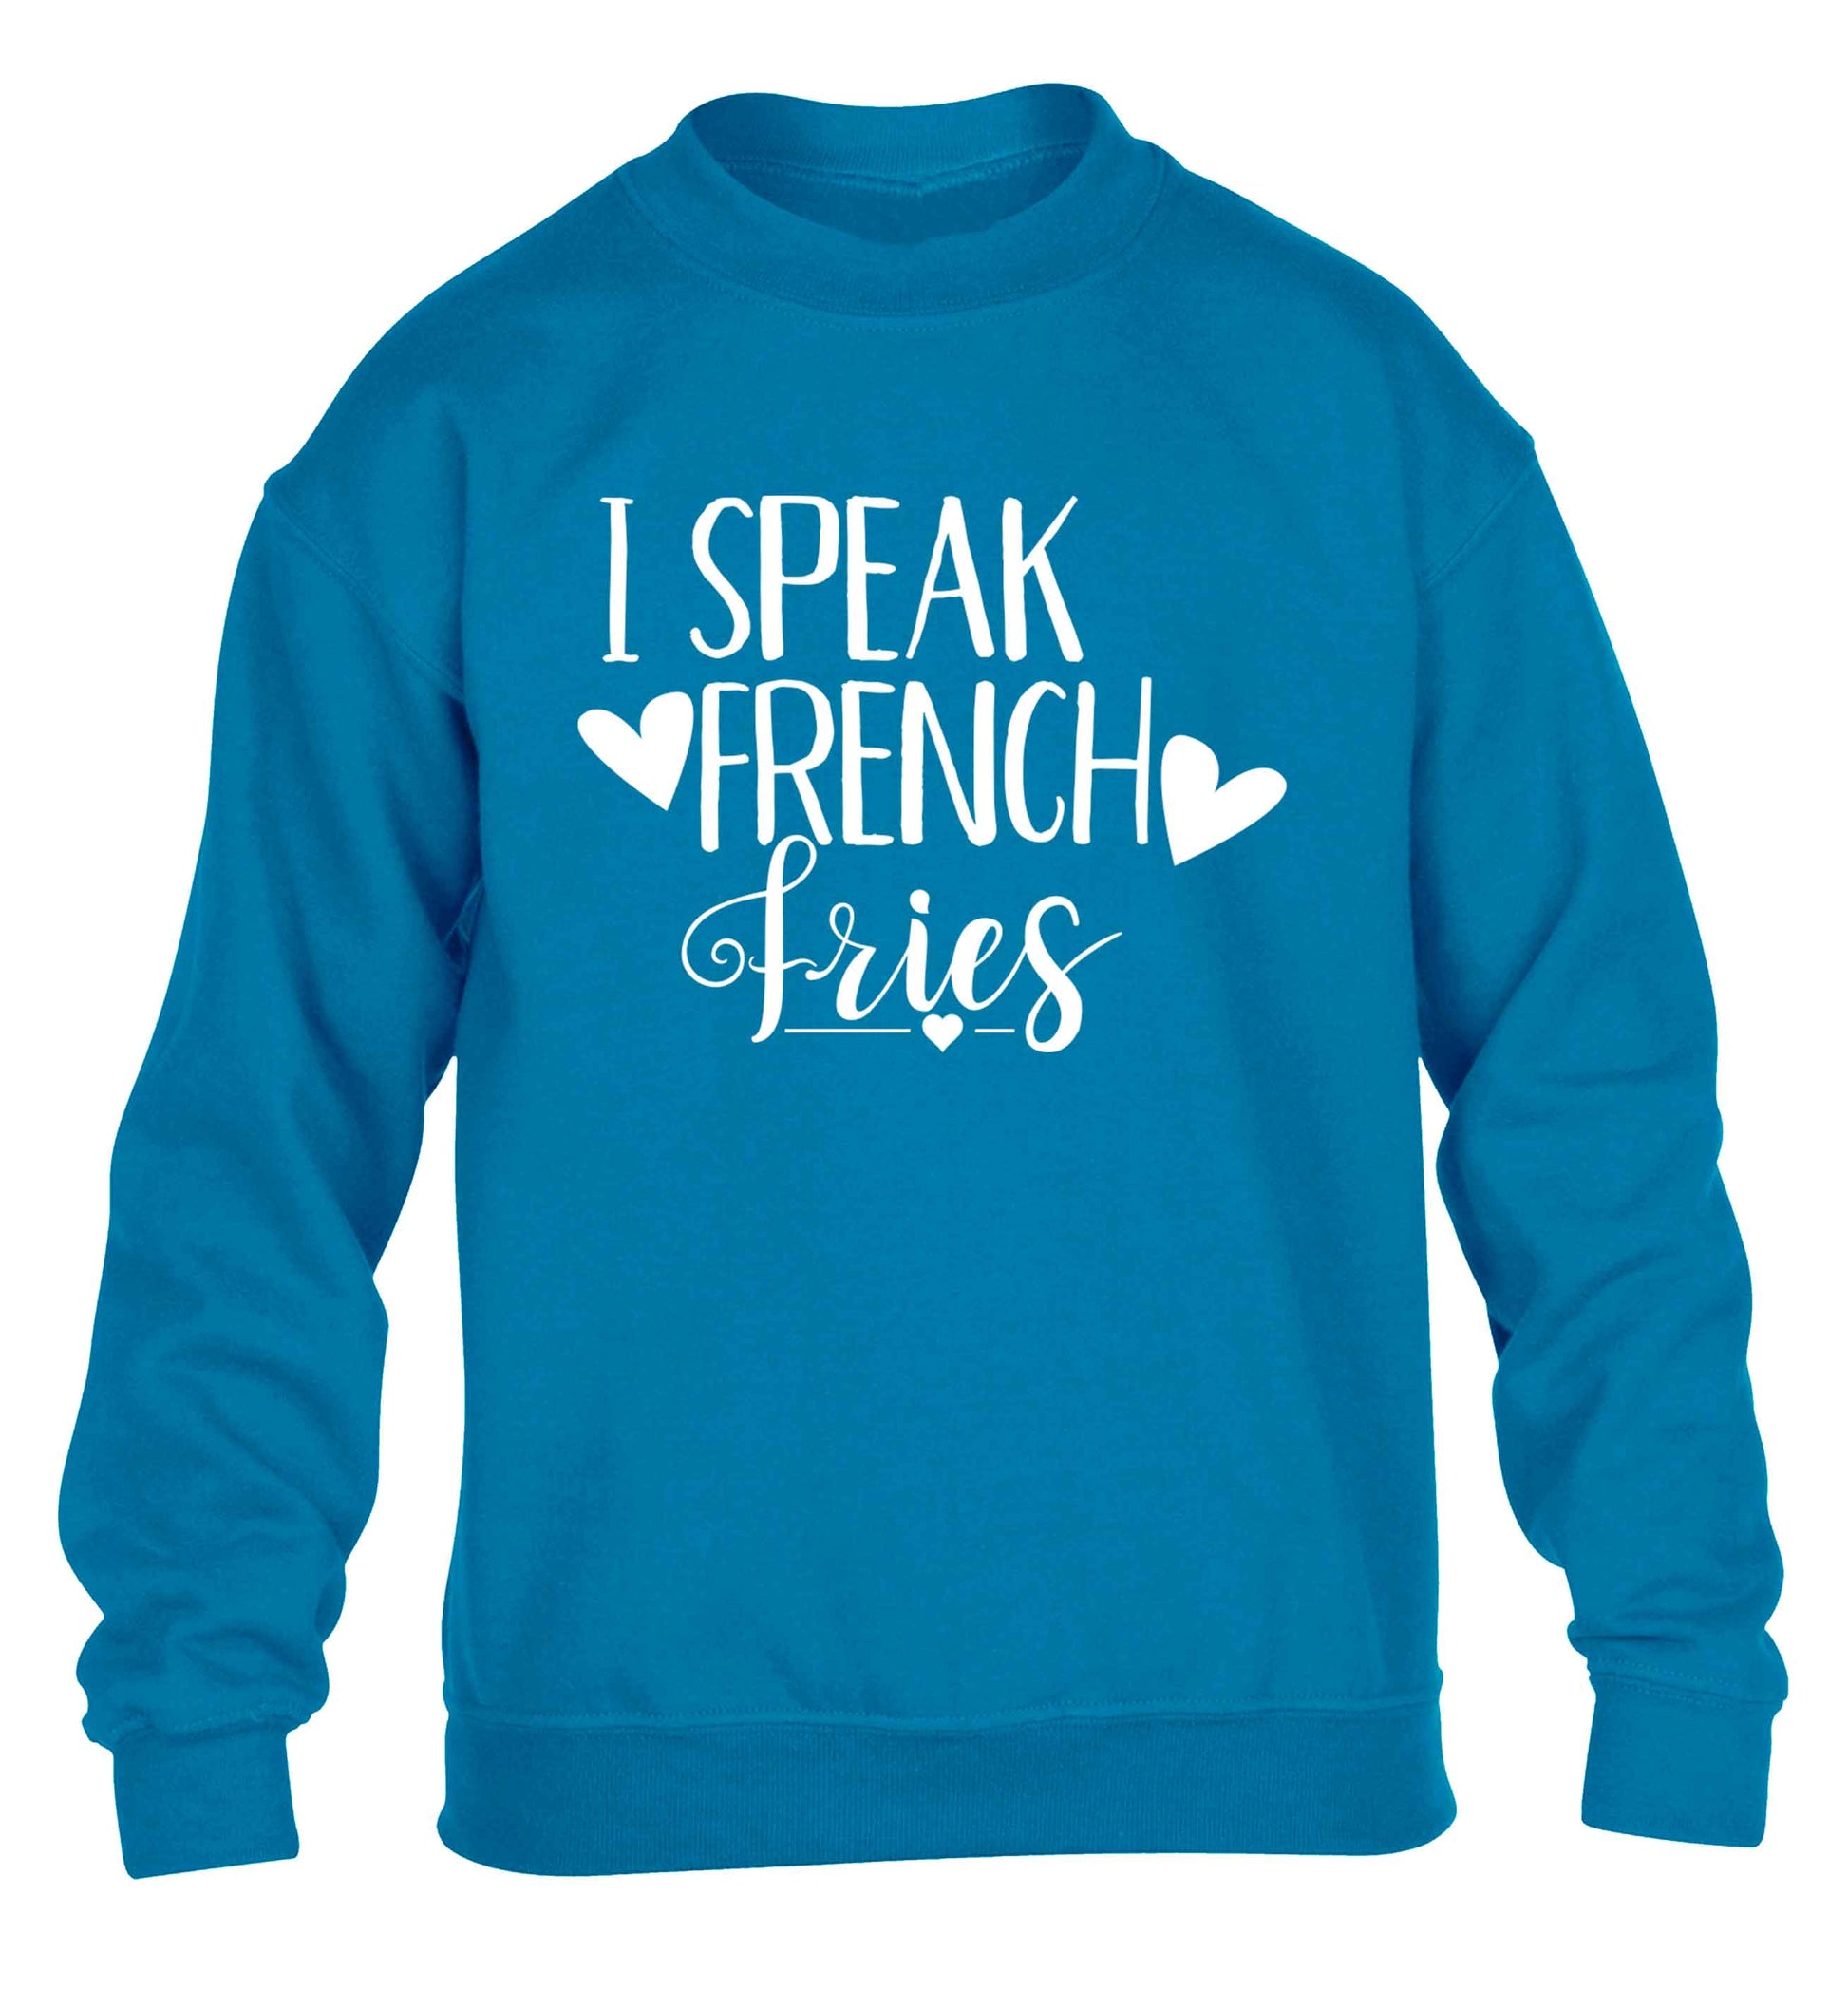 I speak French fries children's blue sweater 12-13 Years